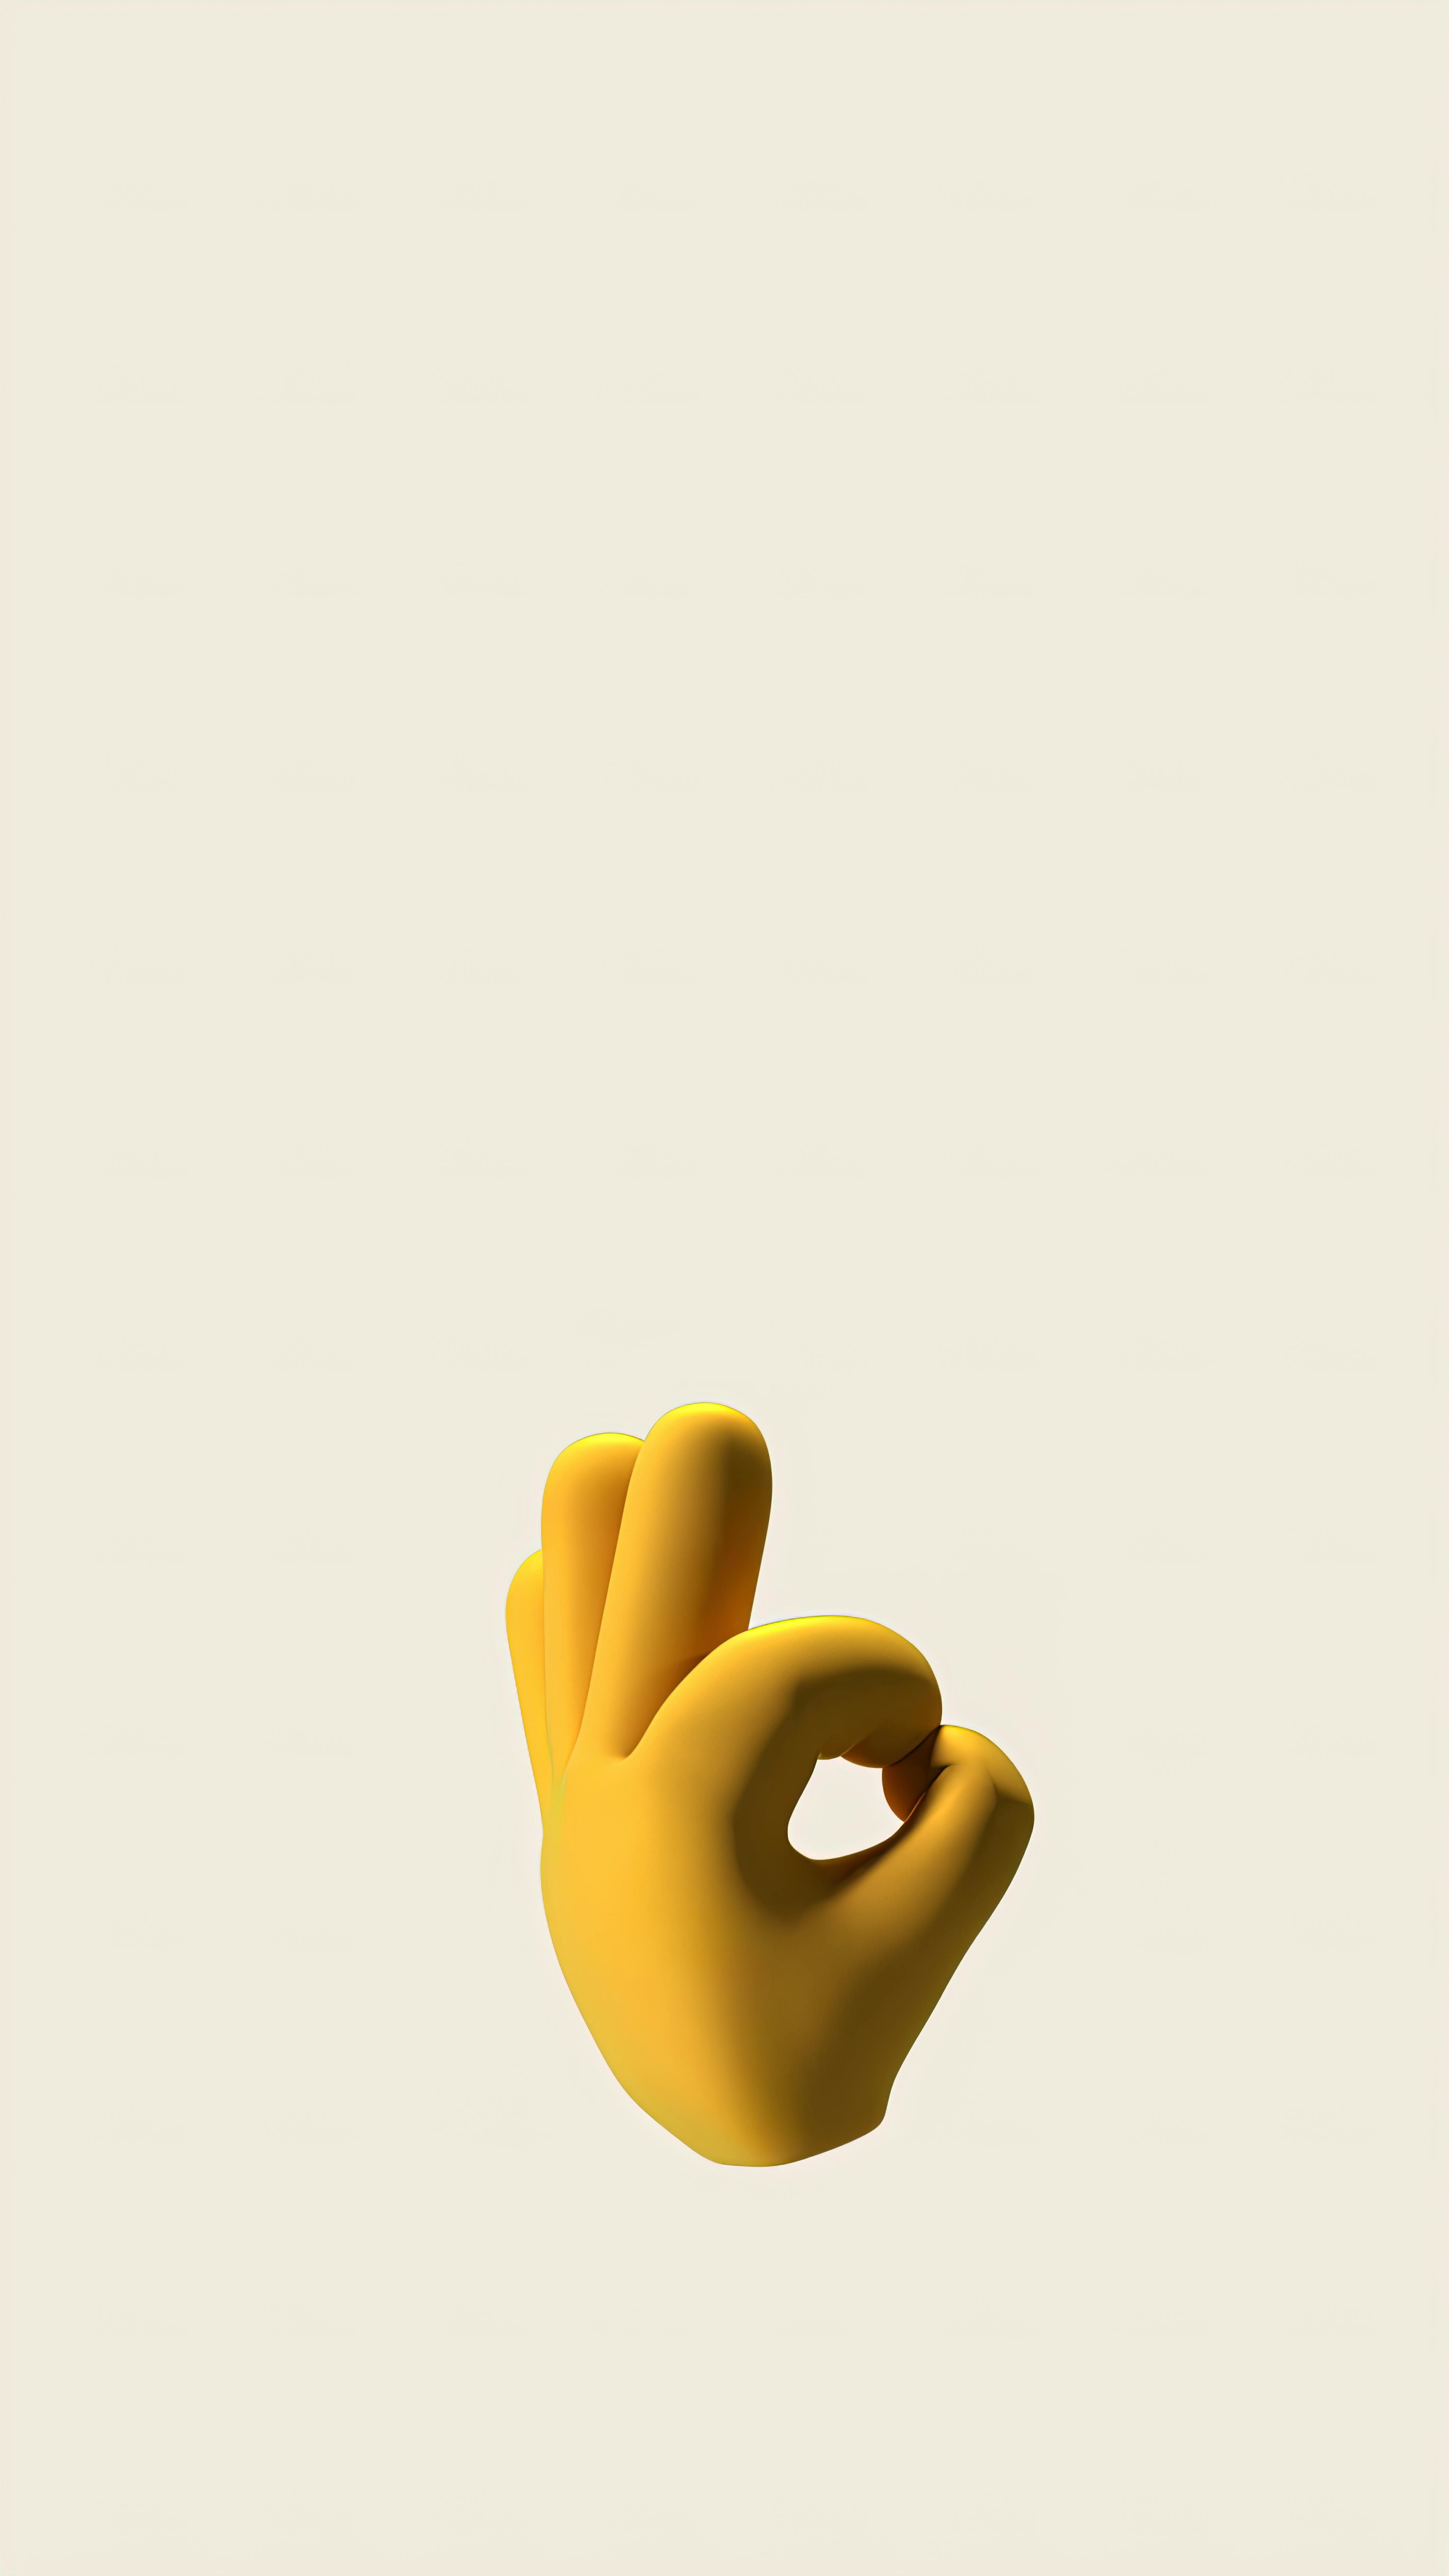 OK Hand Emoji on White Background · Free Stock Photo